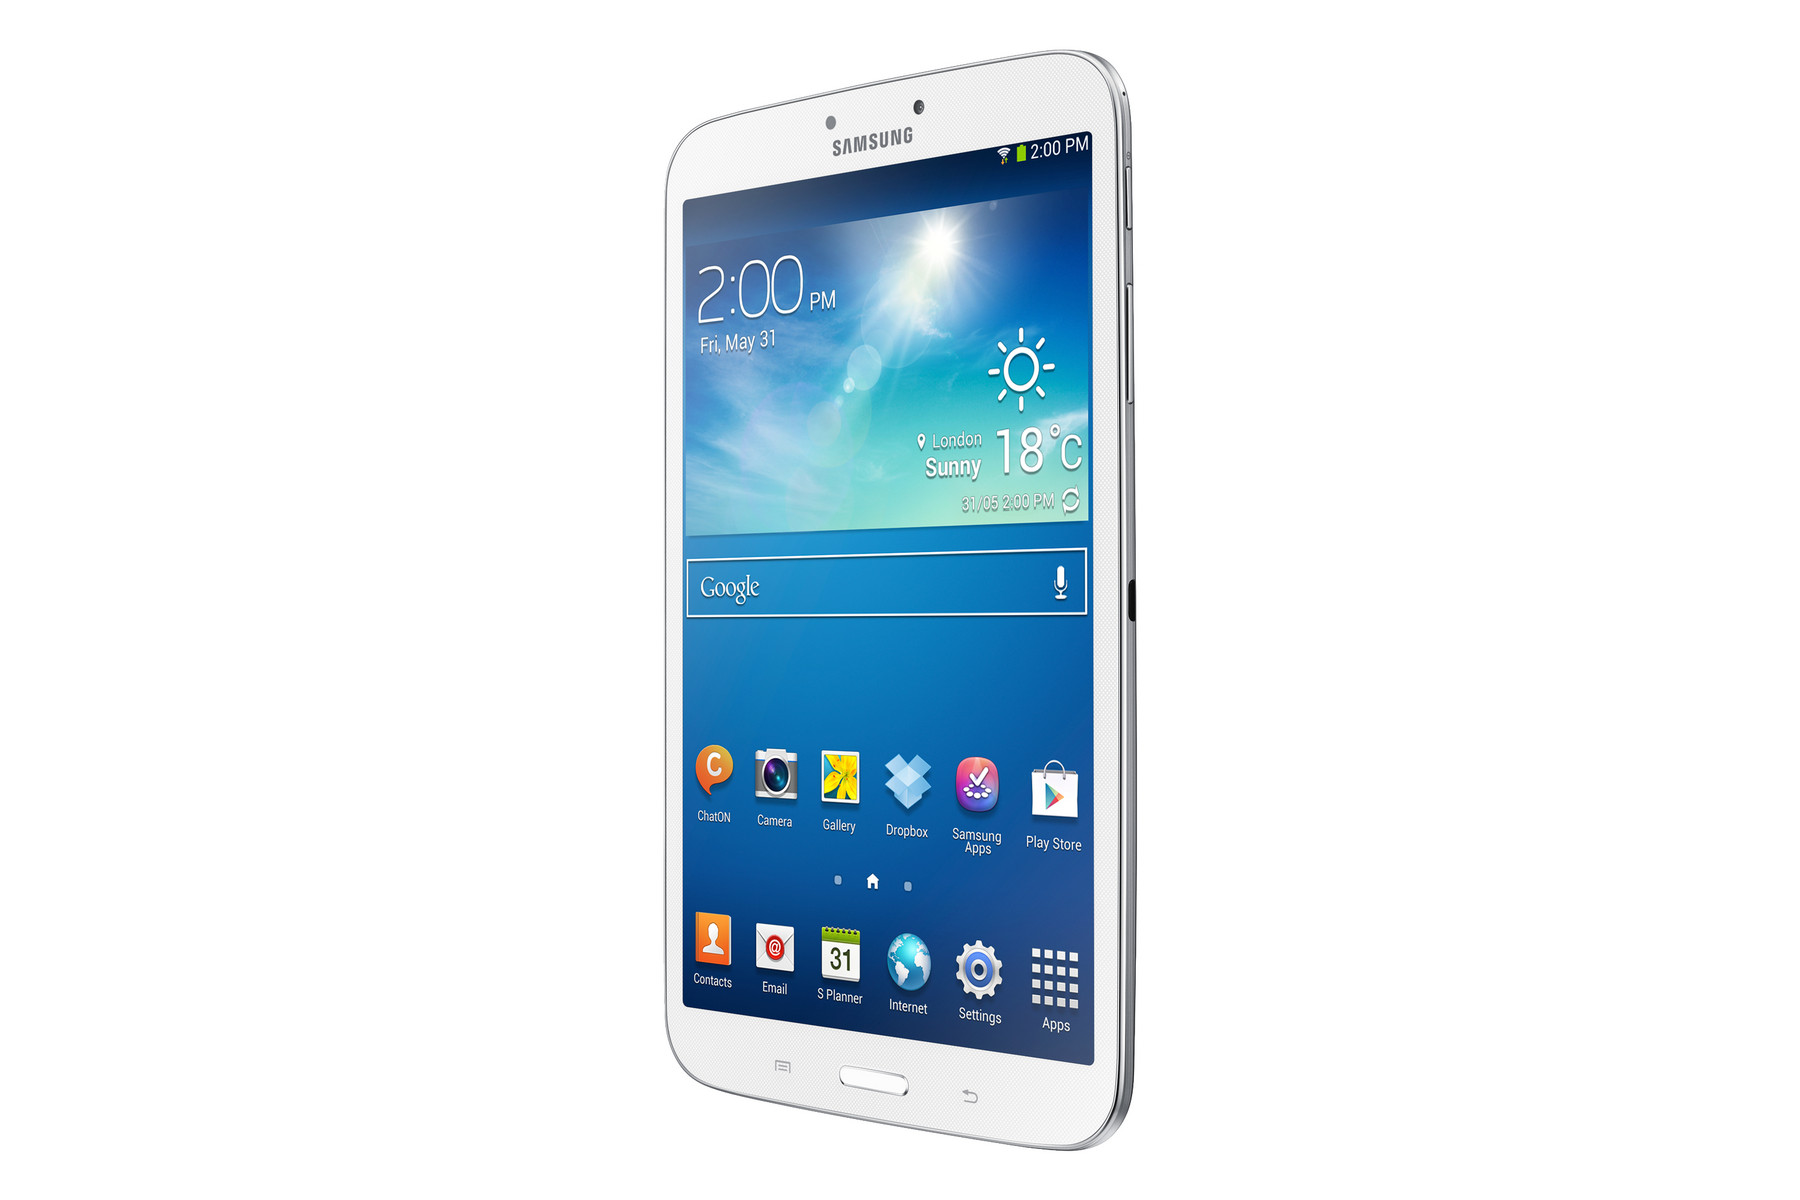 Samsung Galaxy Tab 3 8.0 Recovery Mode